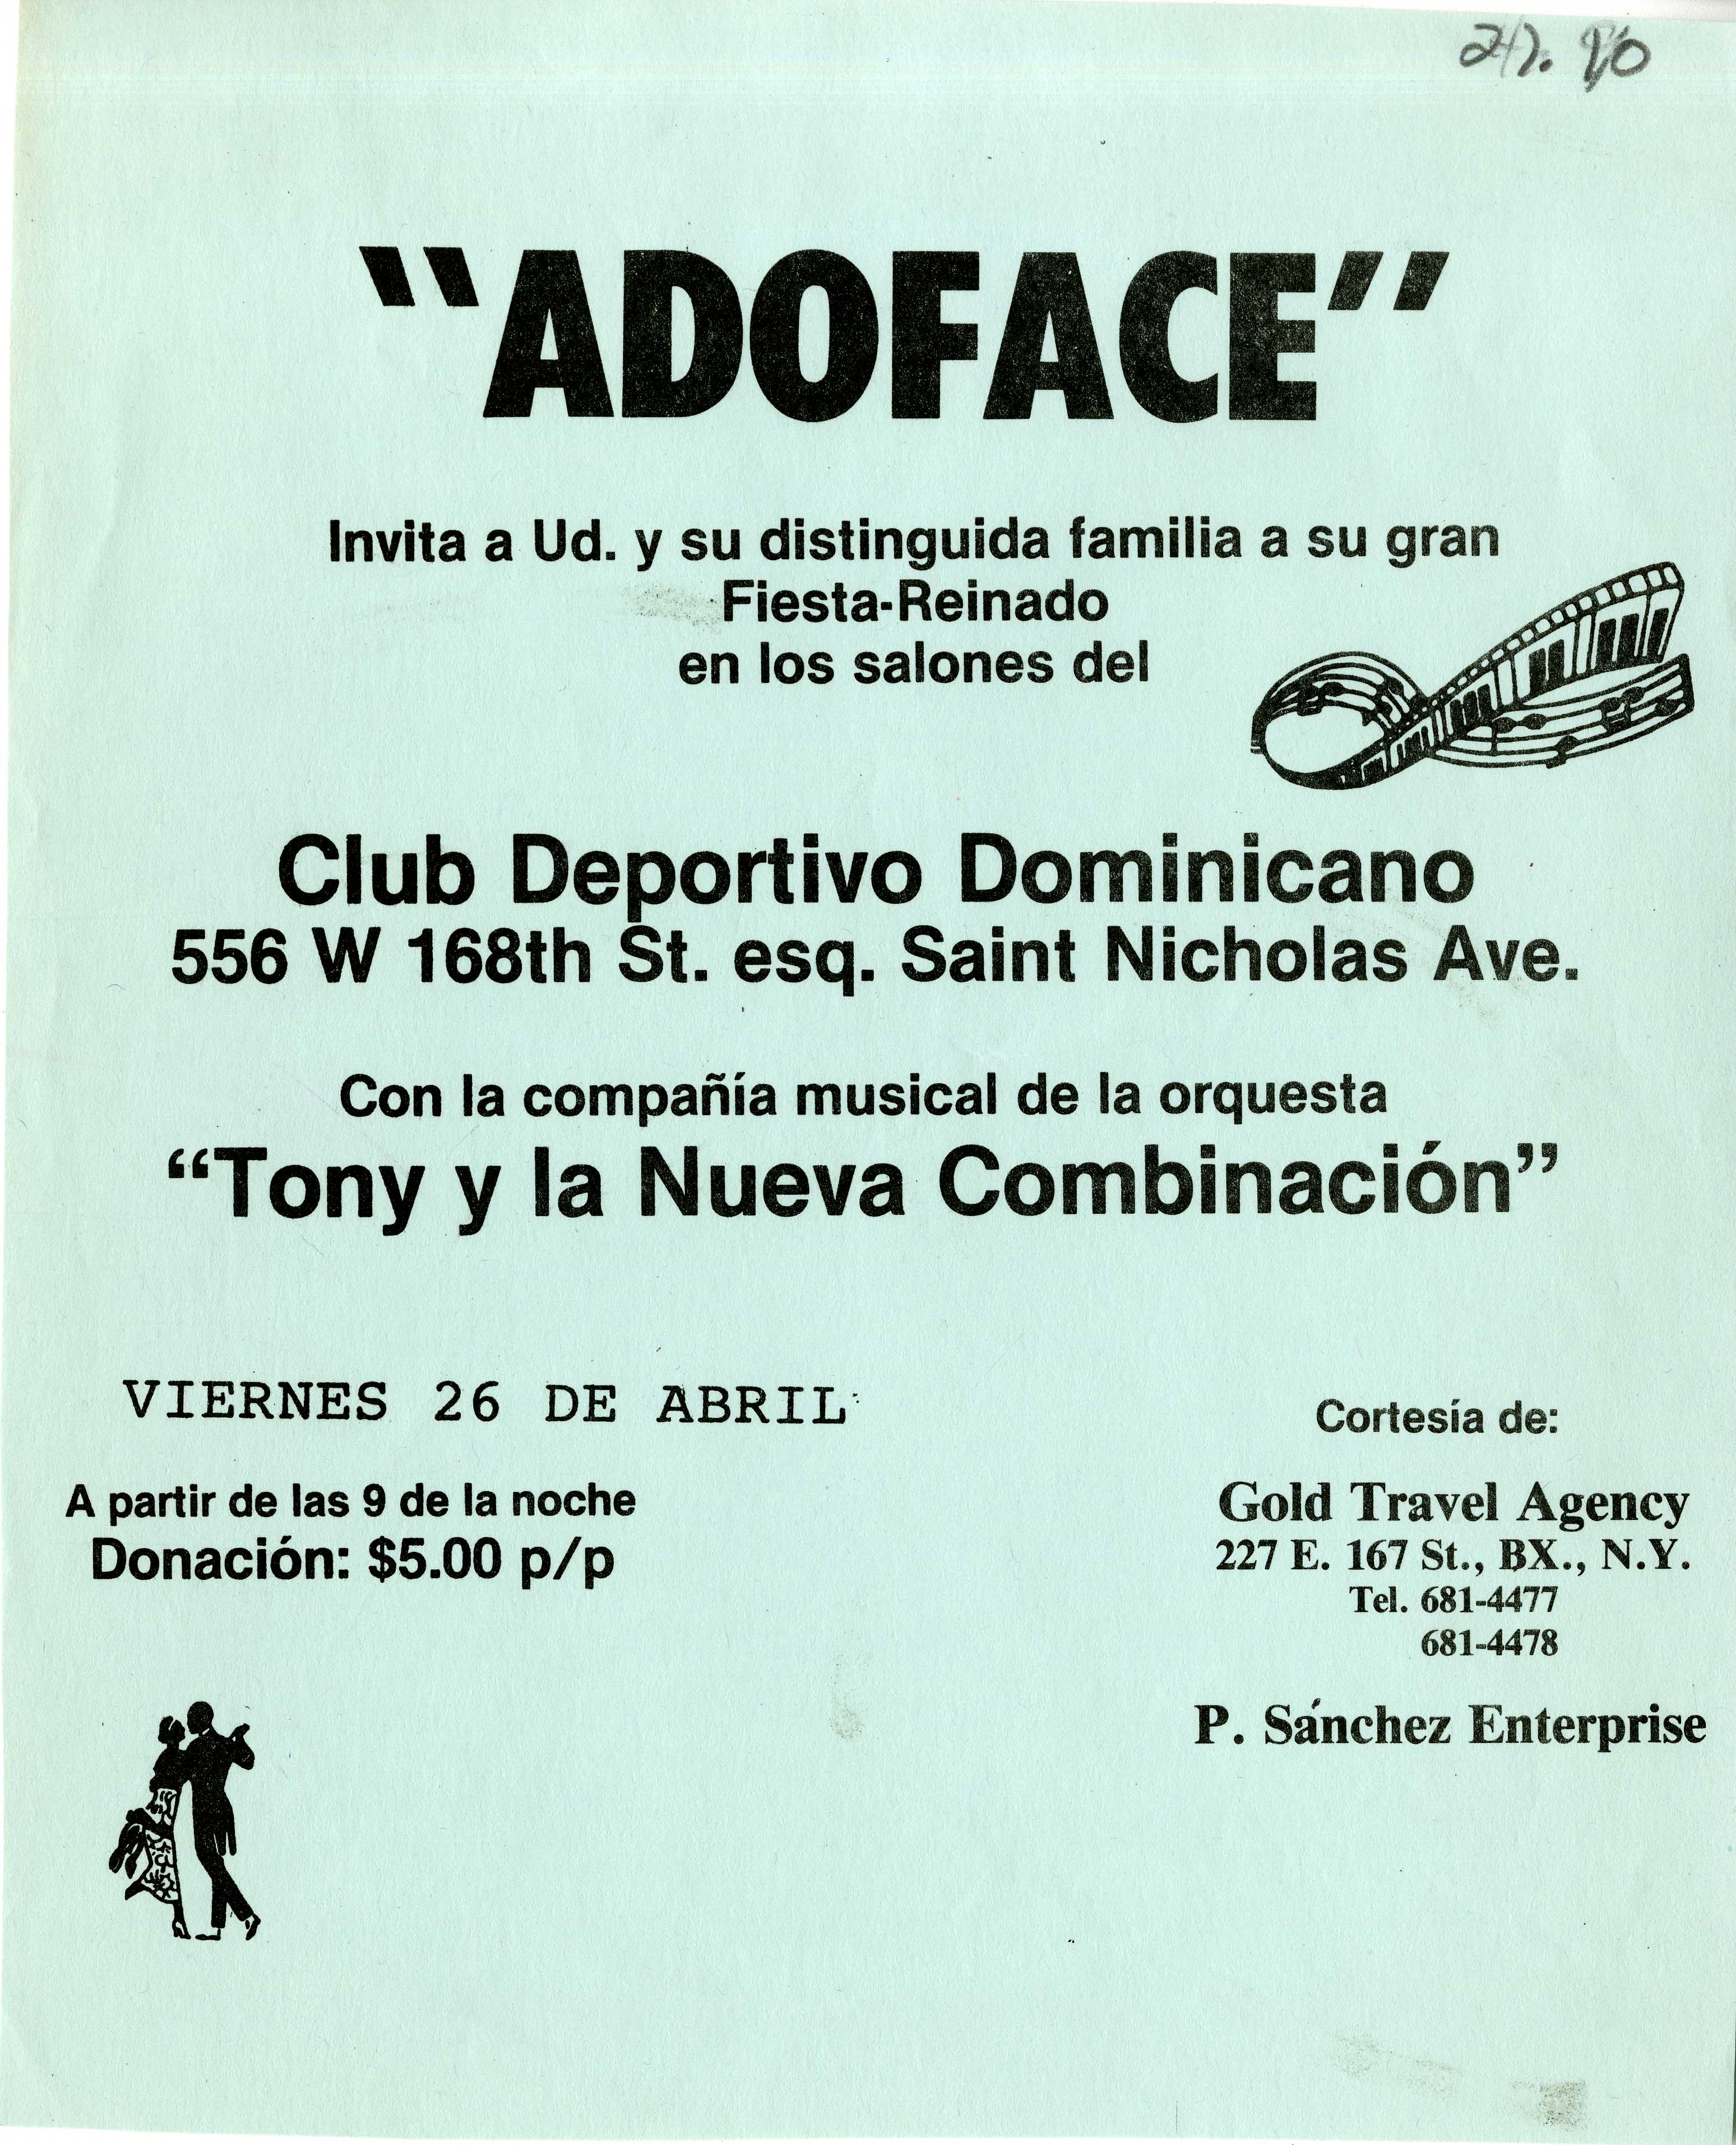 Club Deportivo Dominicano, Flyer, ca. 1980s